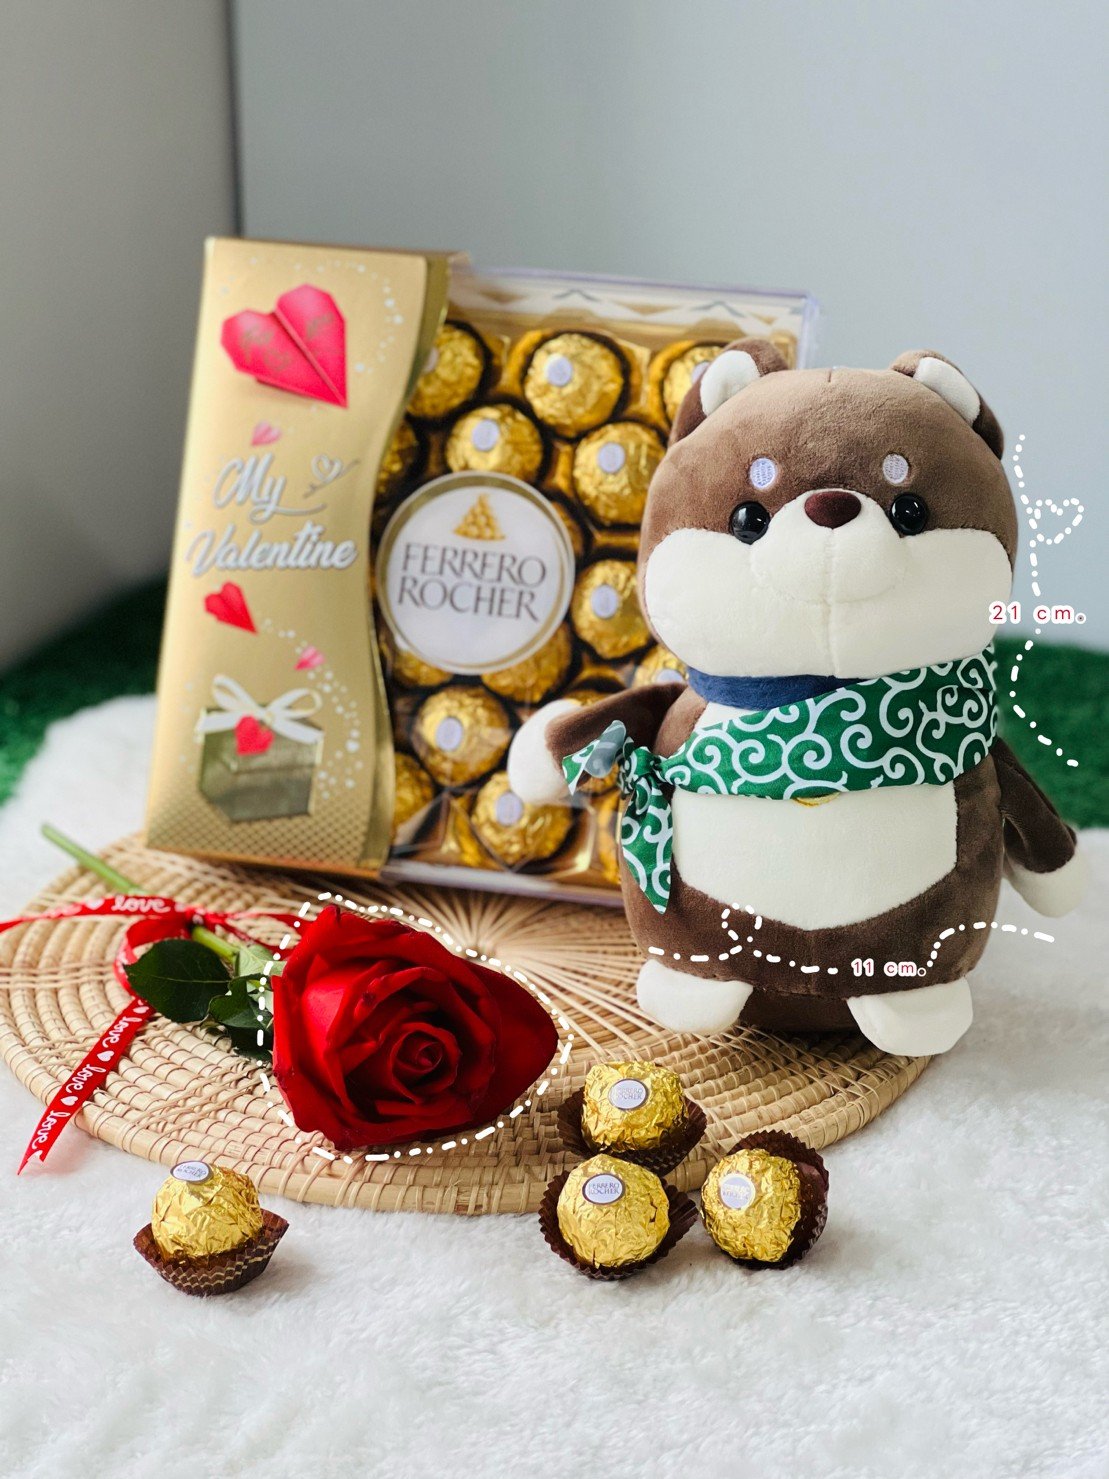 LOVE002 ดอกกุหลาบ1ดอก+ตุ๊กตาหมาน้อยชิบะ+ช็อคโกแลตเฟอเรโร่